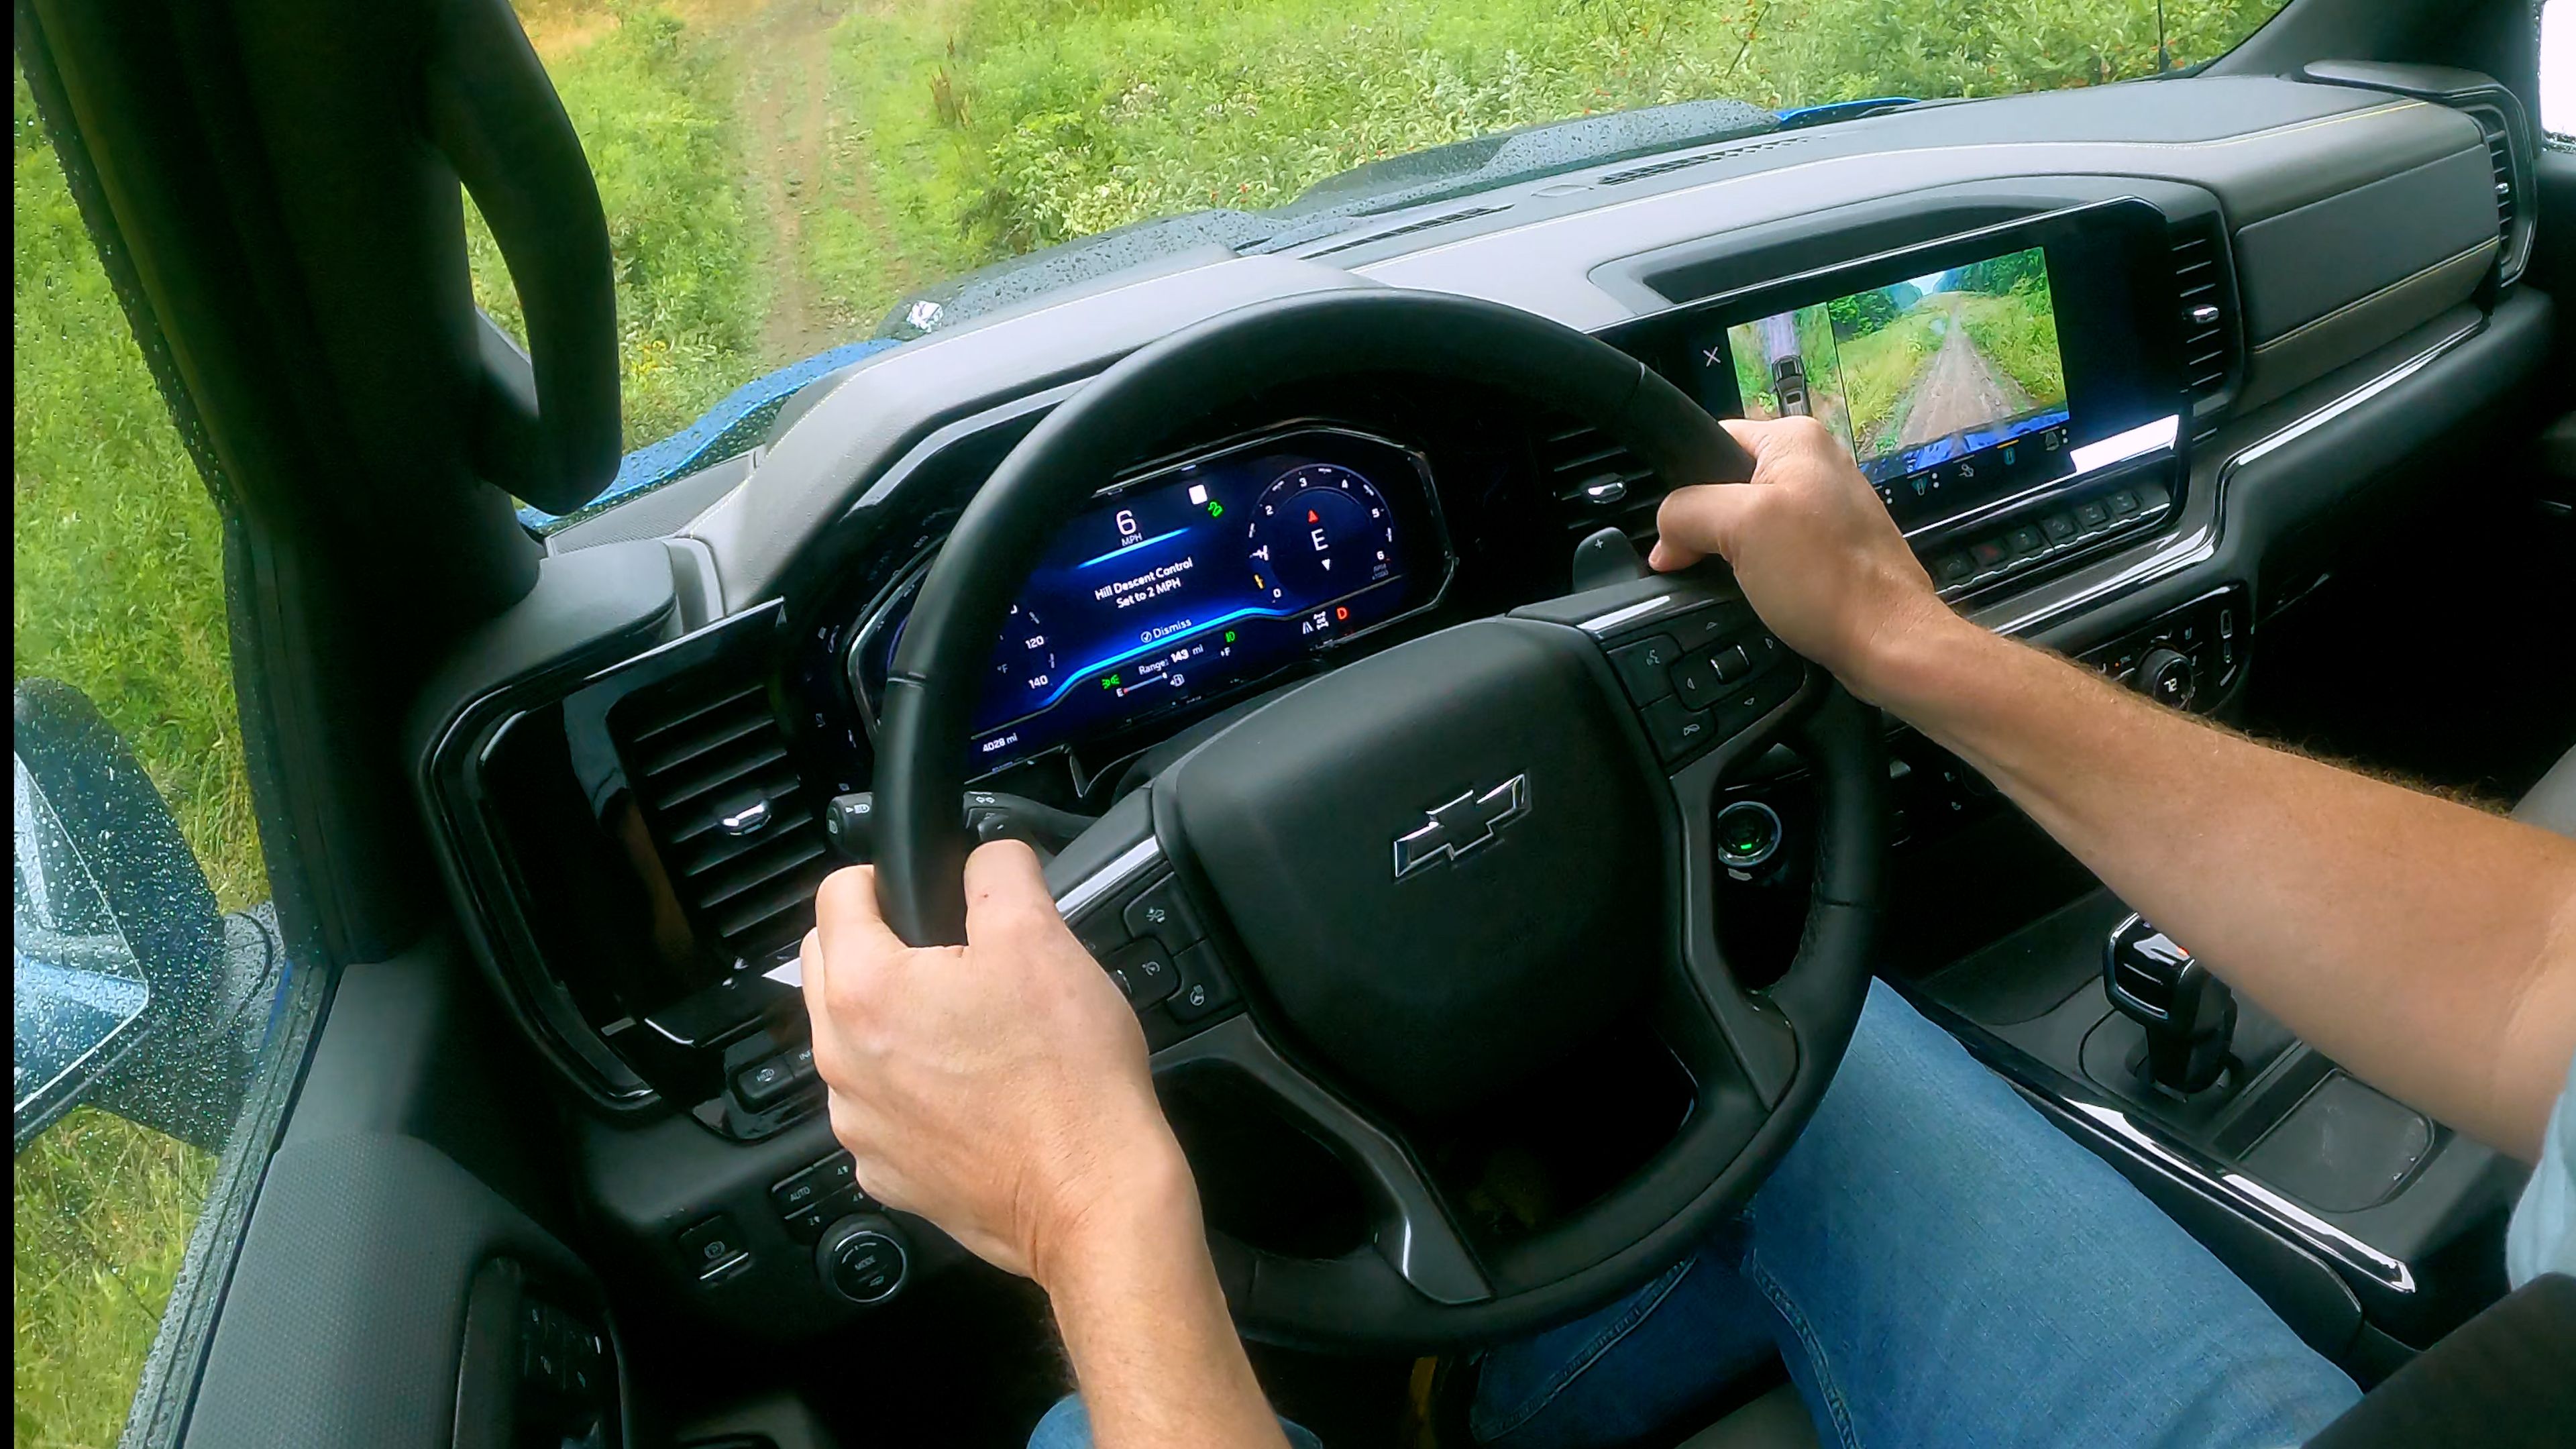 2022 Chevrolet Silverado ZR2 Review: Off-Road Worthy, But It's No Raptor or TRX